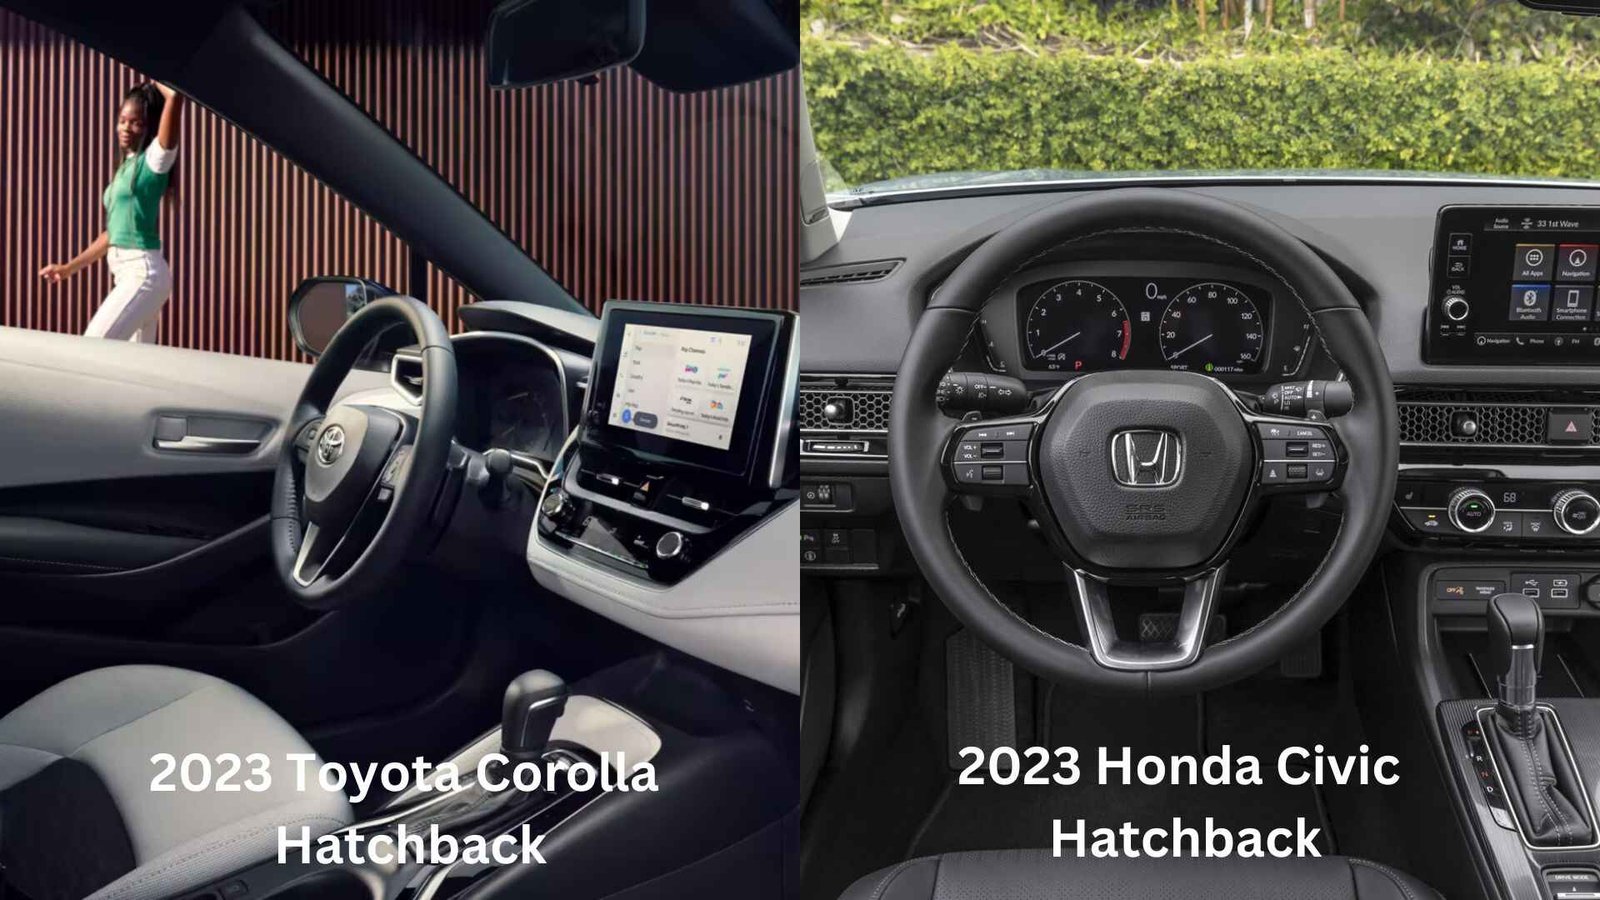 2023 Toyota Corolla hatchback vs 2023 Honda Civic Hatchback